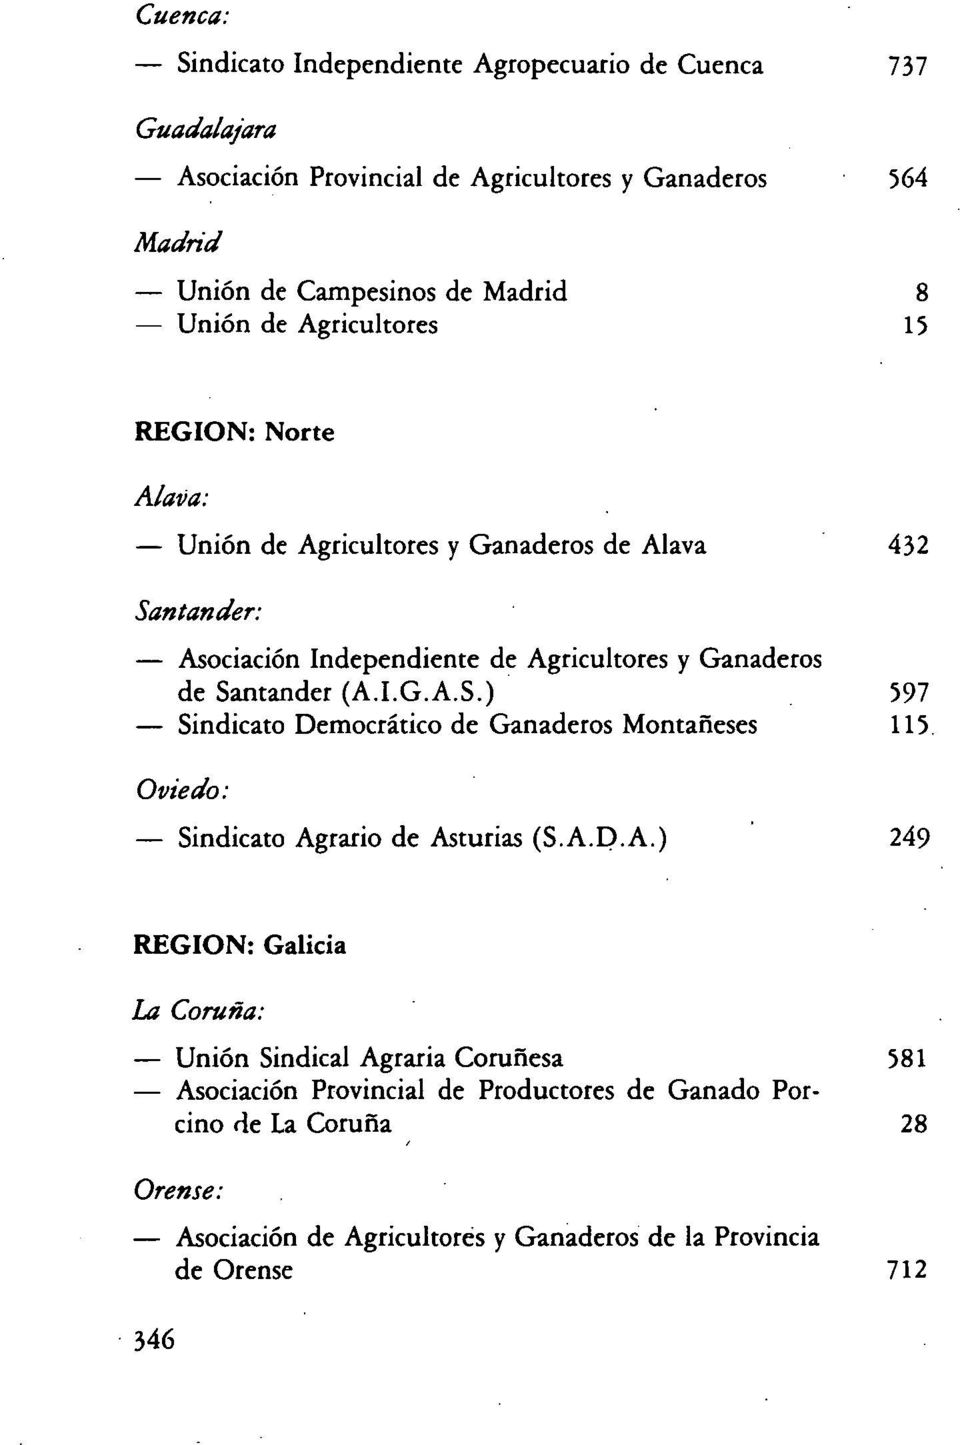 (A.I.G.A.S.) 597 - Sindicato Democrático de Ganaderos Montañeses 115. Oviedo: - Sindicato Agrario de Astutias (S.A.D.A.) ^ 249 REGION: Galicia La Coruña: - Unión Sindical Agraria Coruñesa - Asociación Provincial de Productores de Ganado Porcino de La Coruña 581 28 Oren.